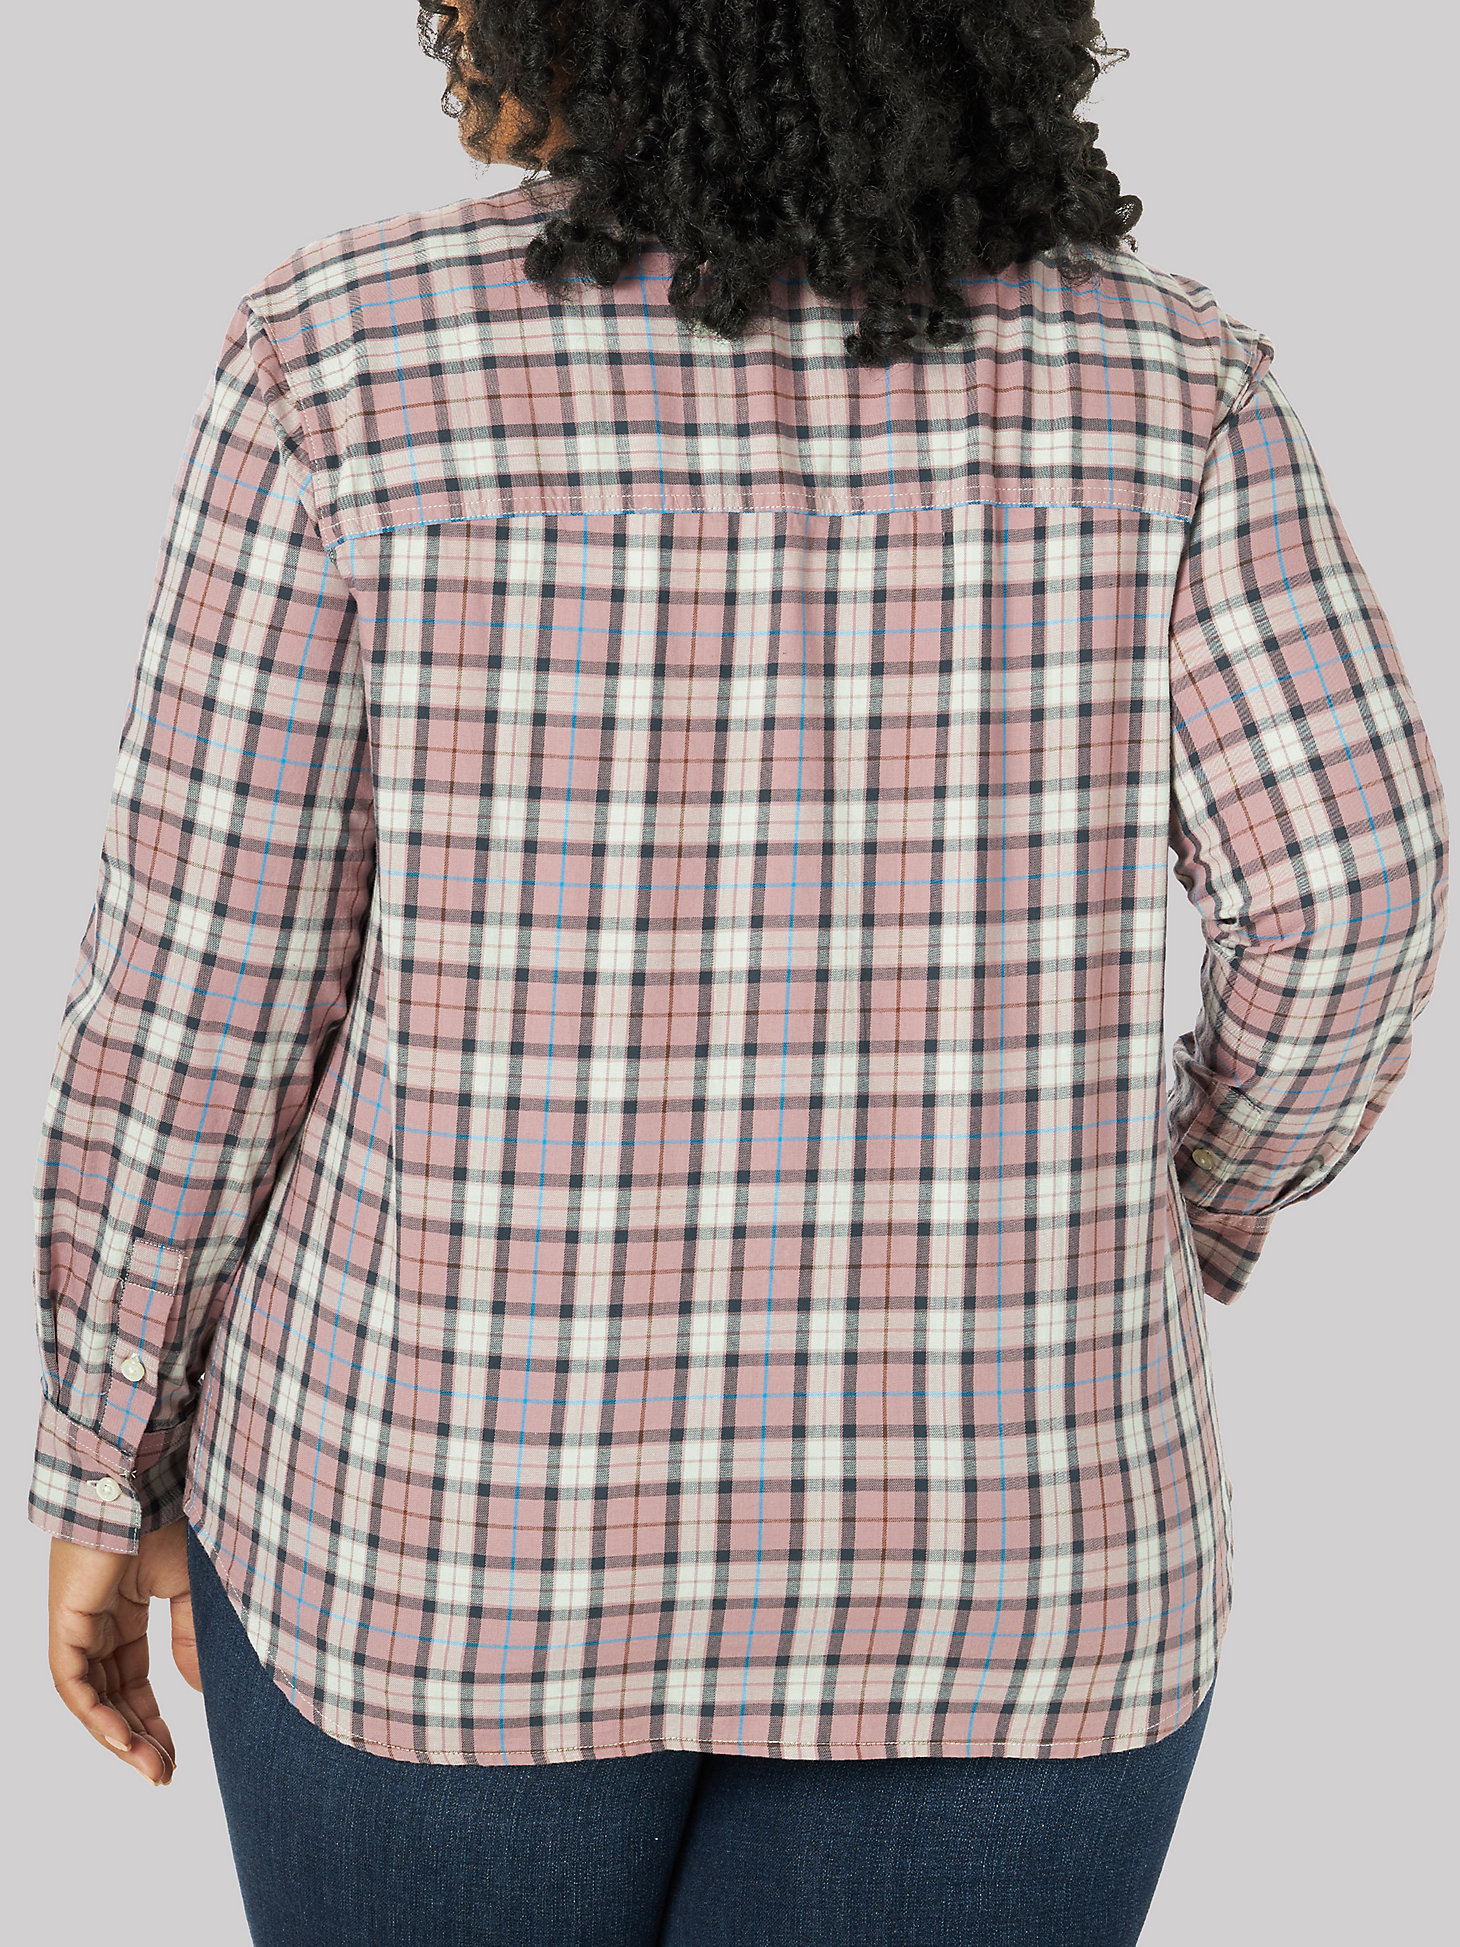 Women's All Purpose Plaid Button Down Shirt - Plus in Smokey Mist alternative view 1